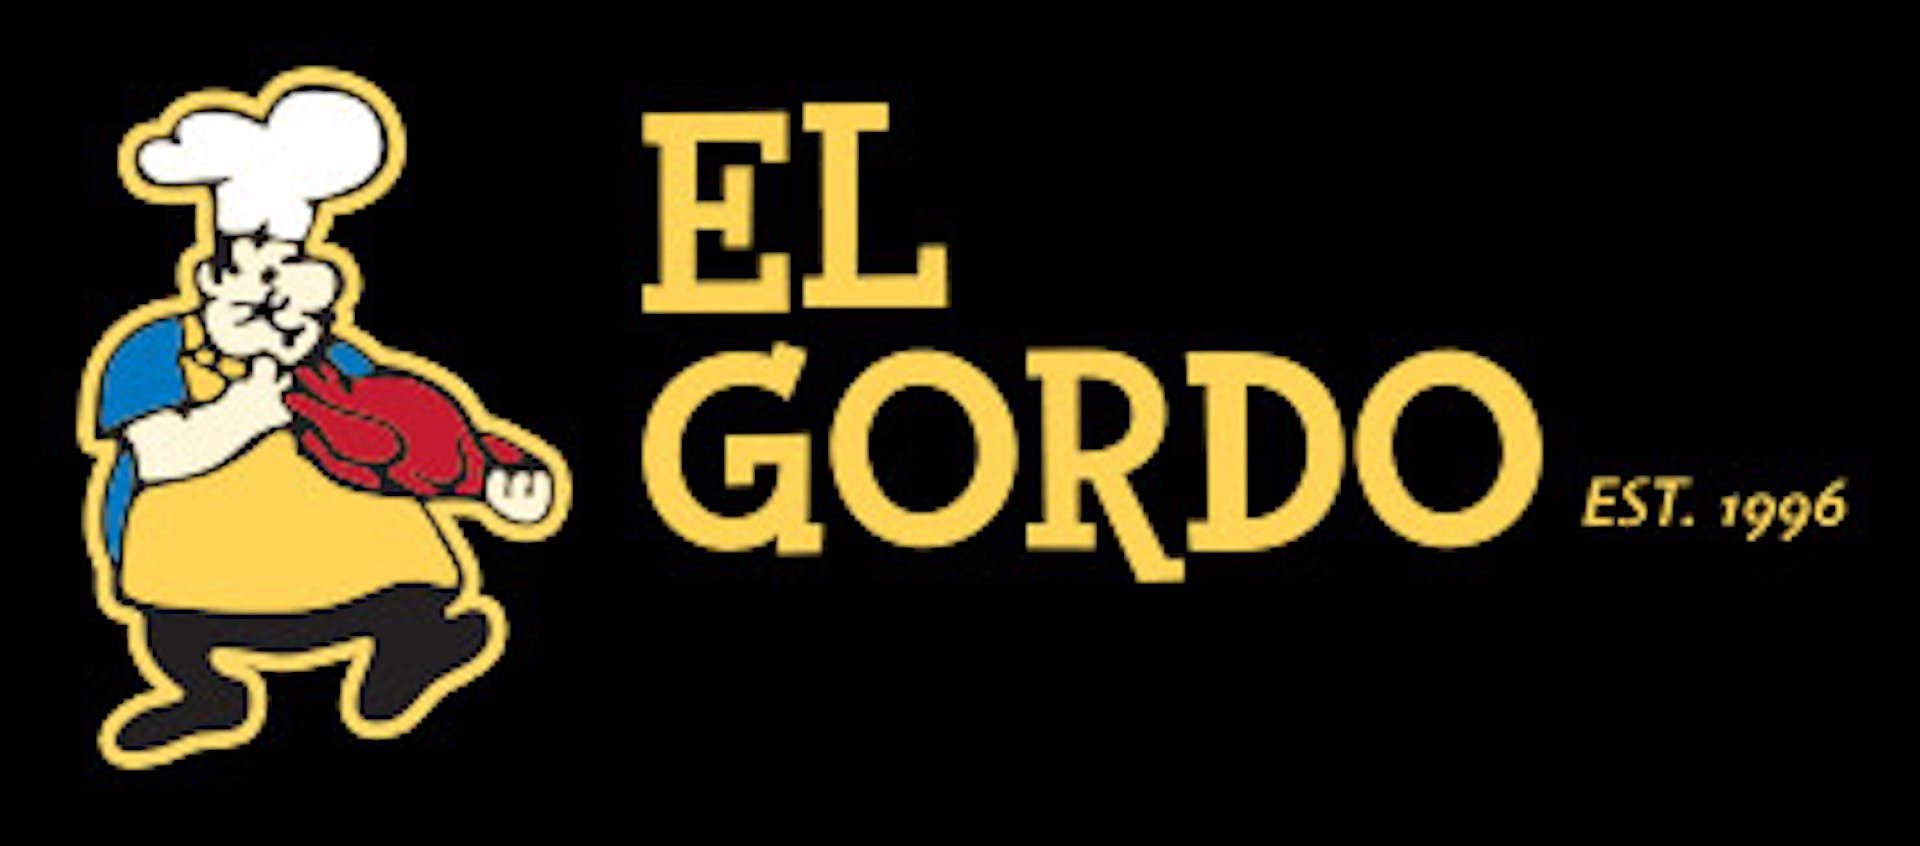 El Gordo Restaurant